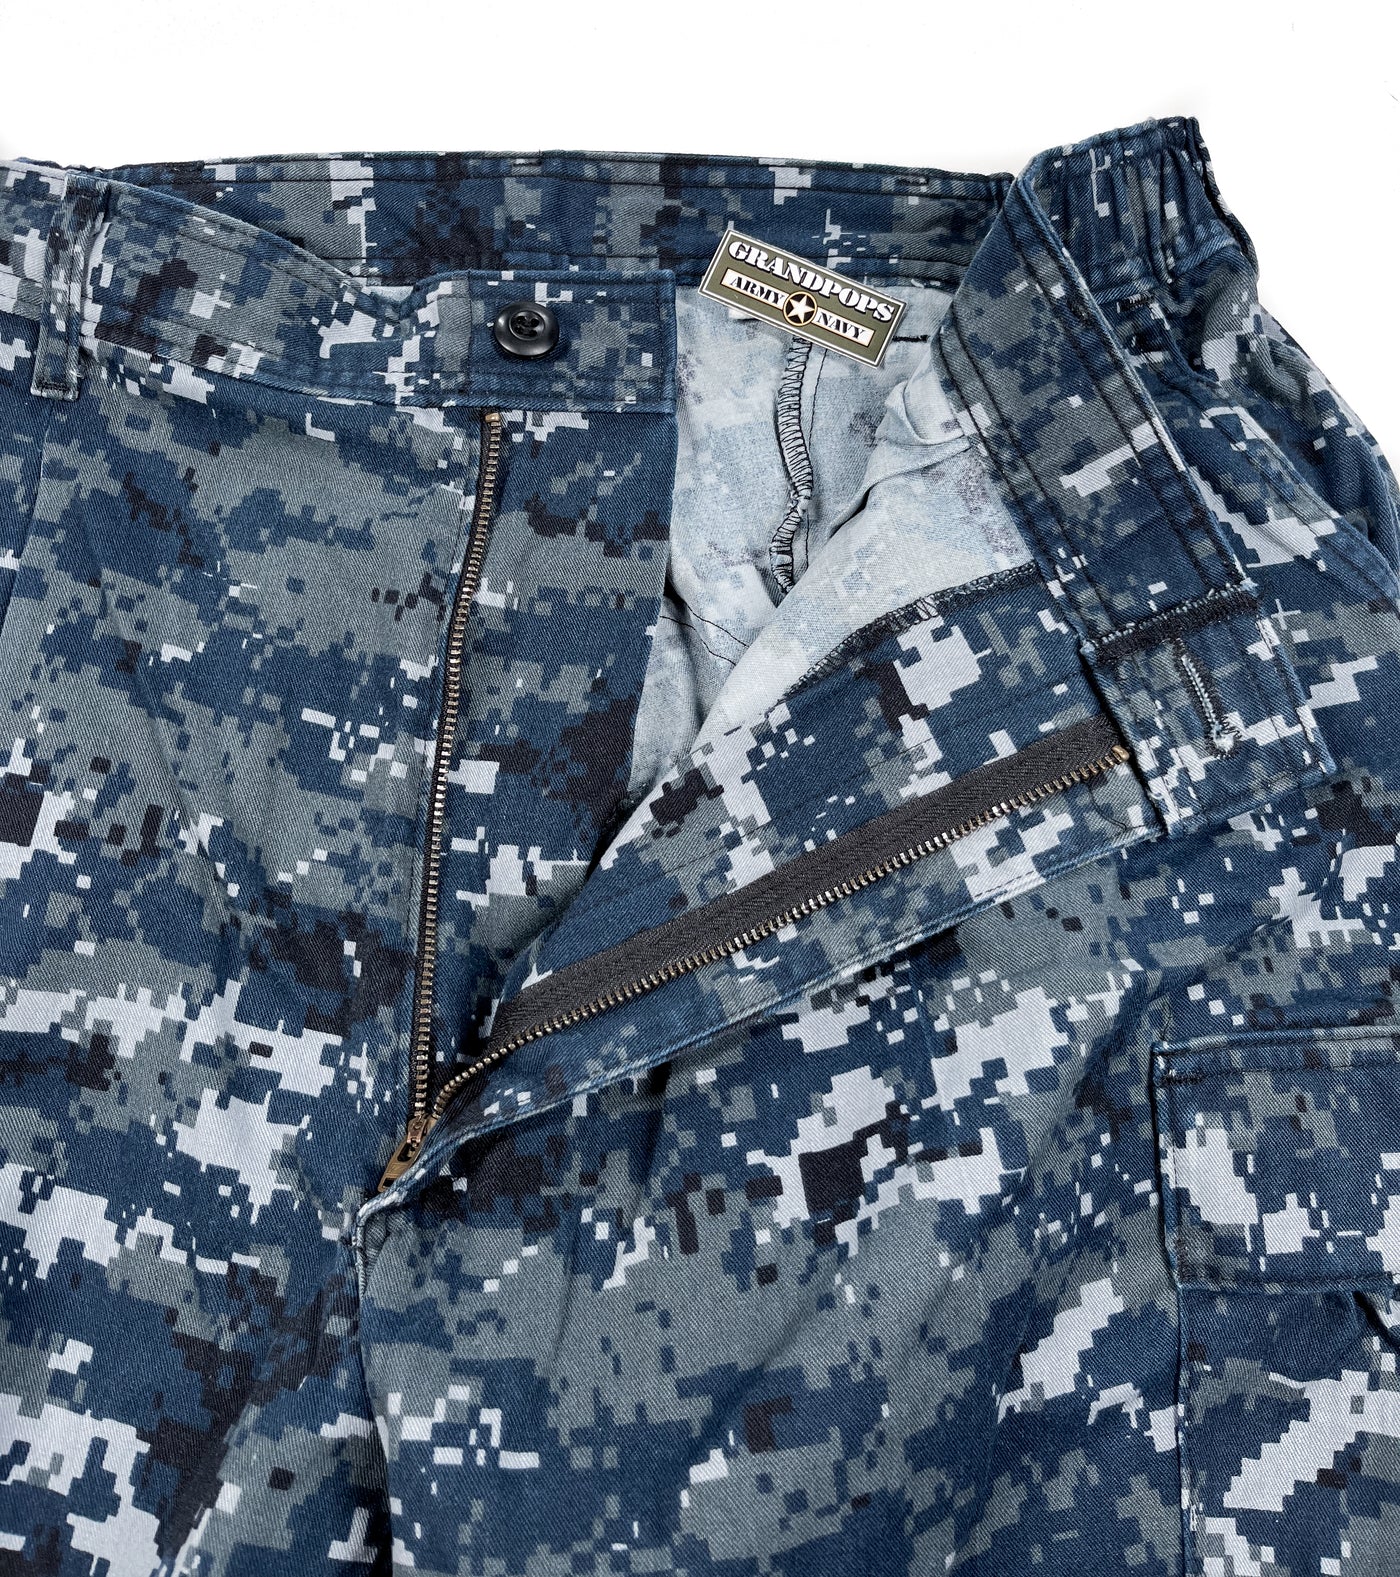 AS-IS NAVY NWU Type 1 Trousers Blue Digital Camo Pants USN Uniform